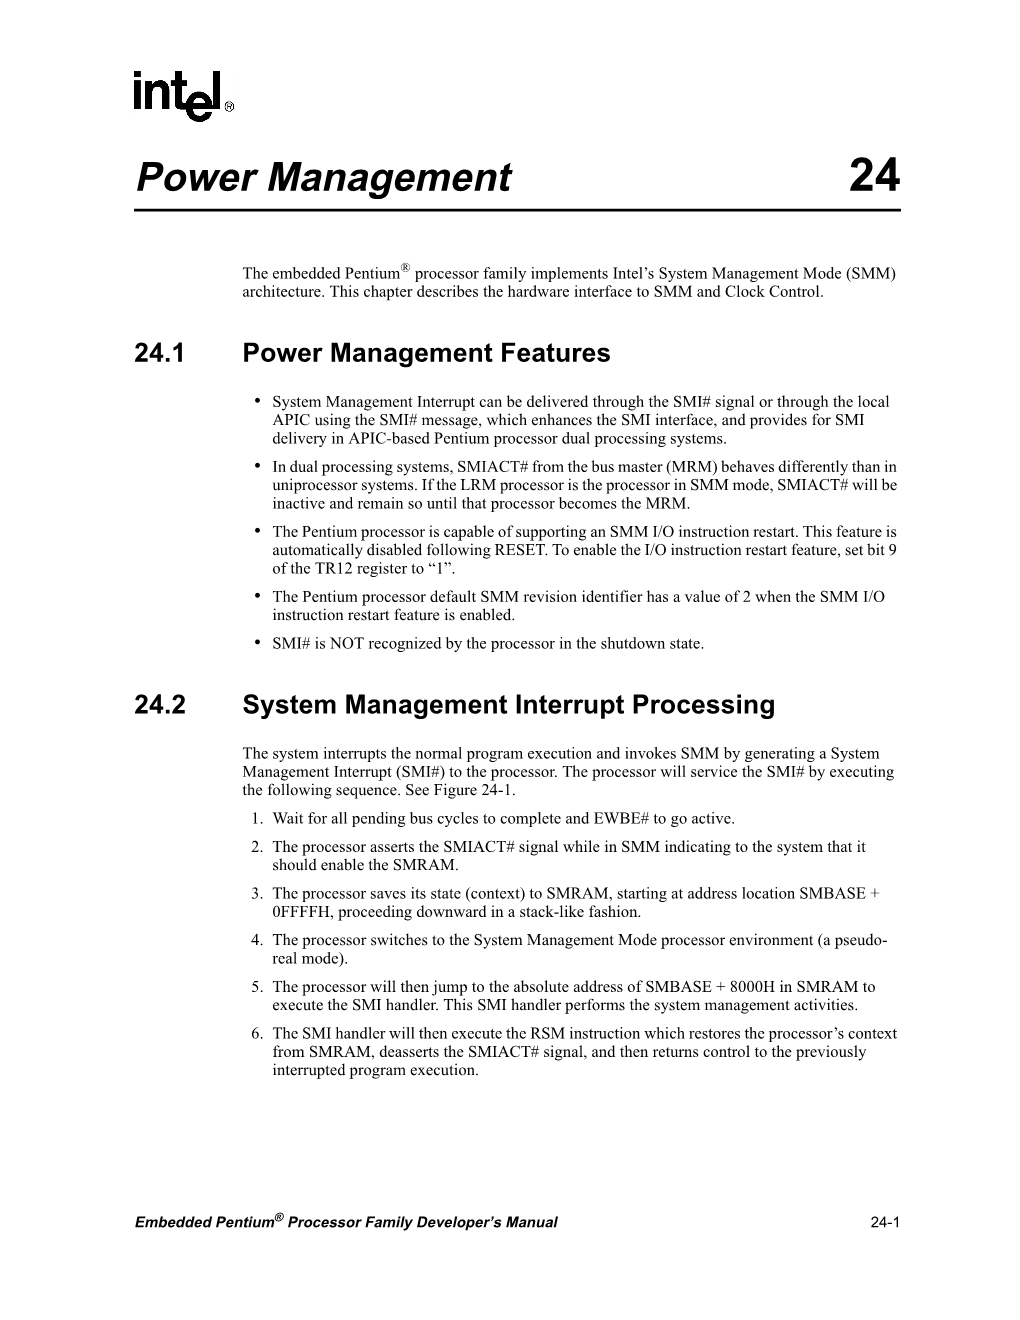 Power Management 24